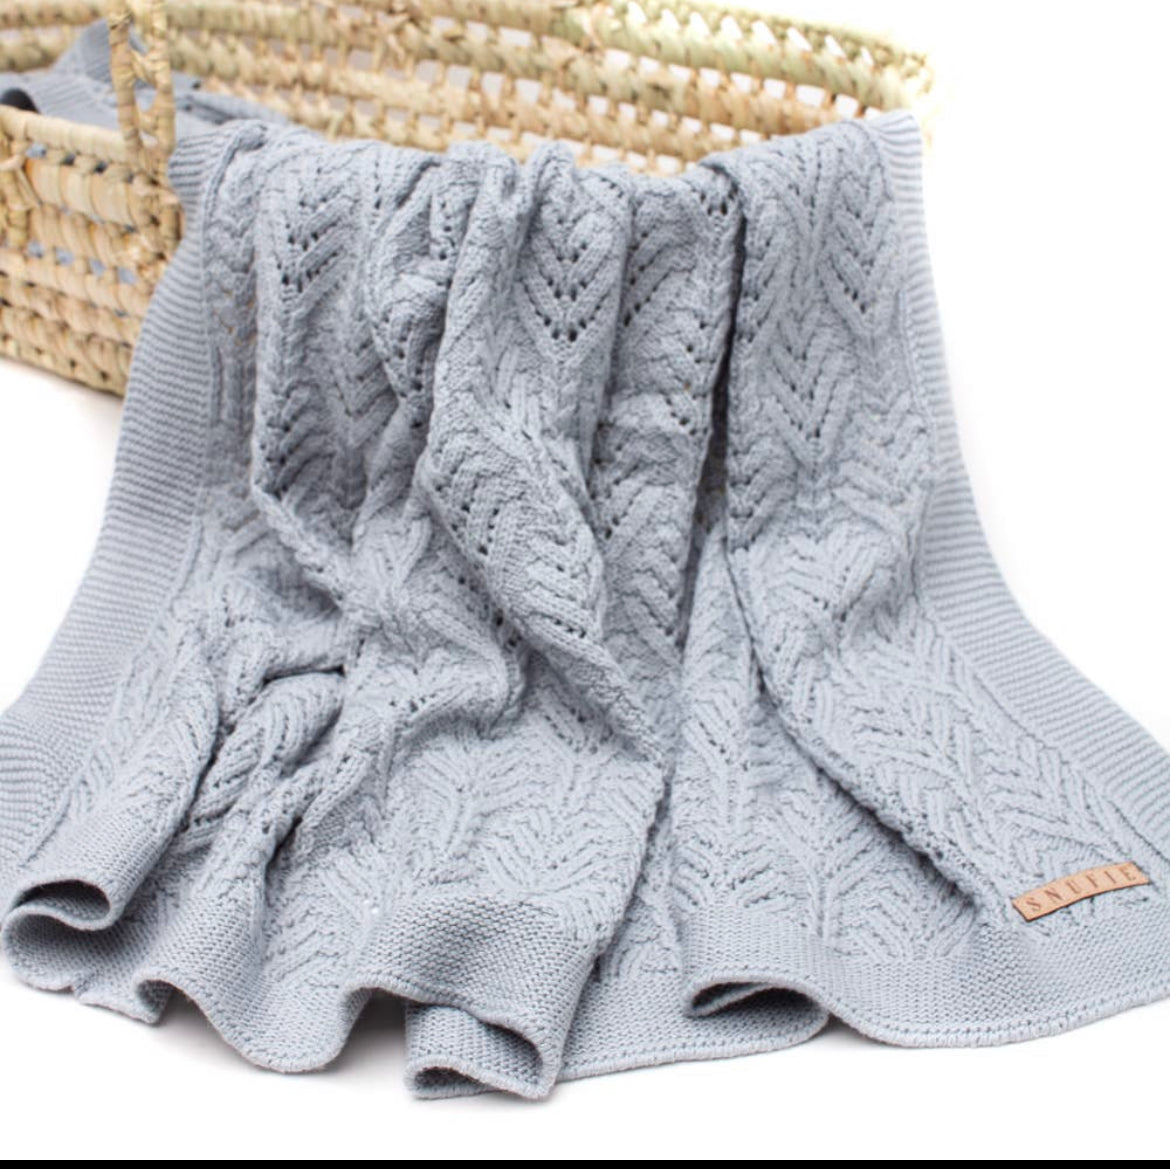 Snufie Knit Baby Blanket